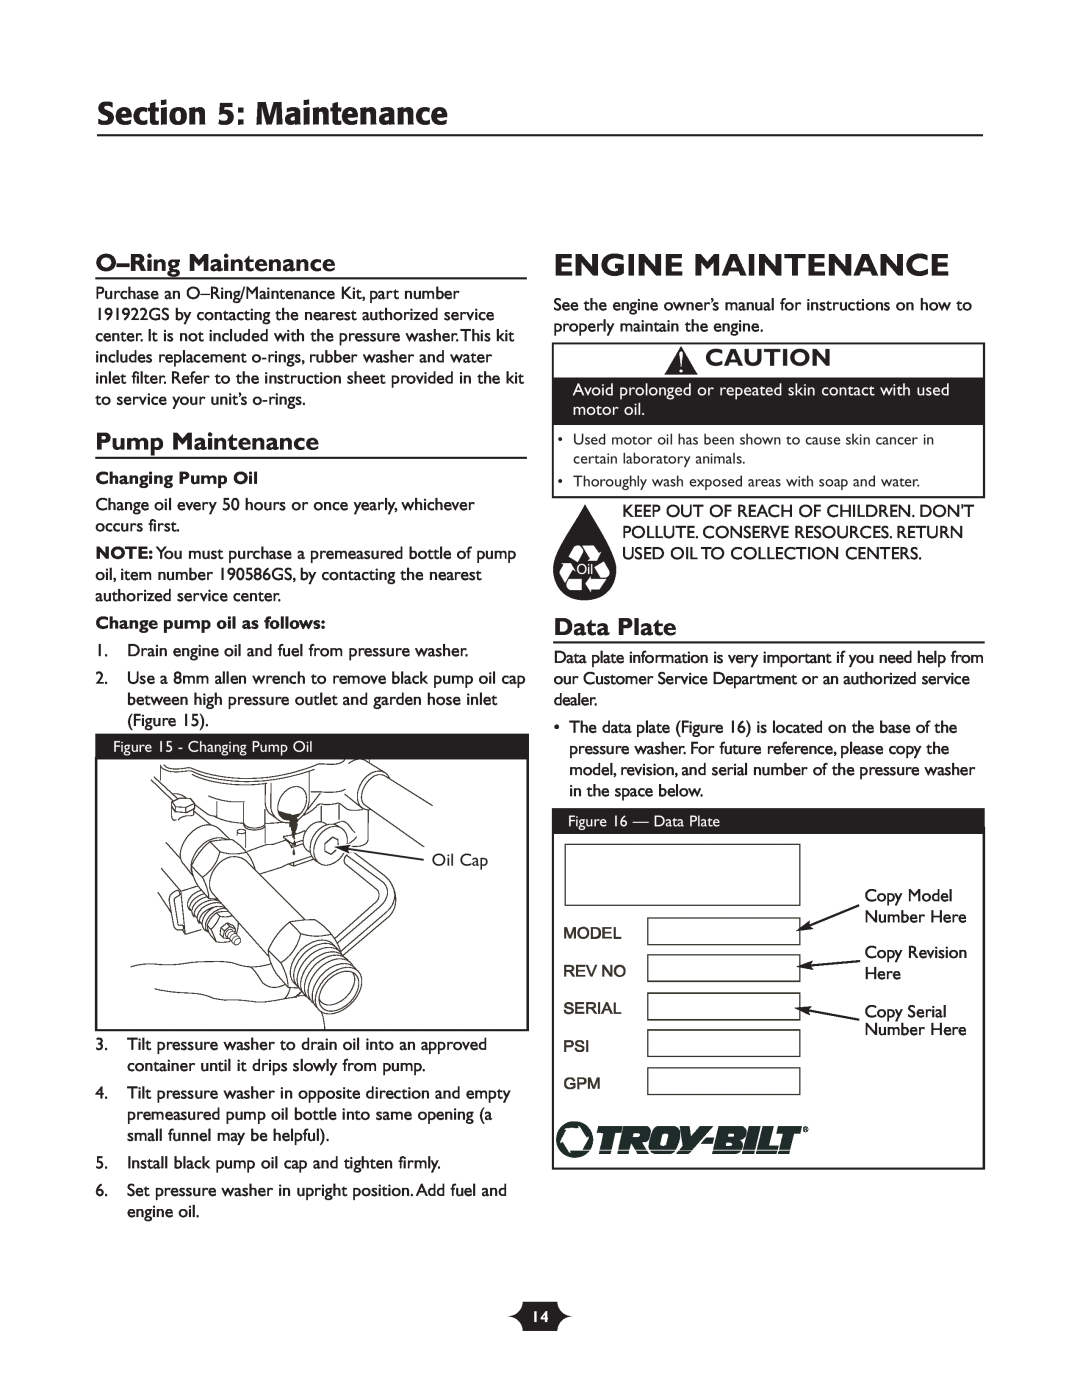 Troy-Bilt 20207 manual Engine Maintenance, O-Ring Maintenance, Pump Maintenance, Data Plate, Changing Pump Oil 